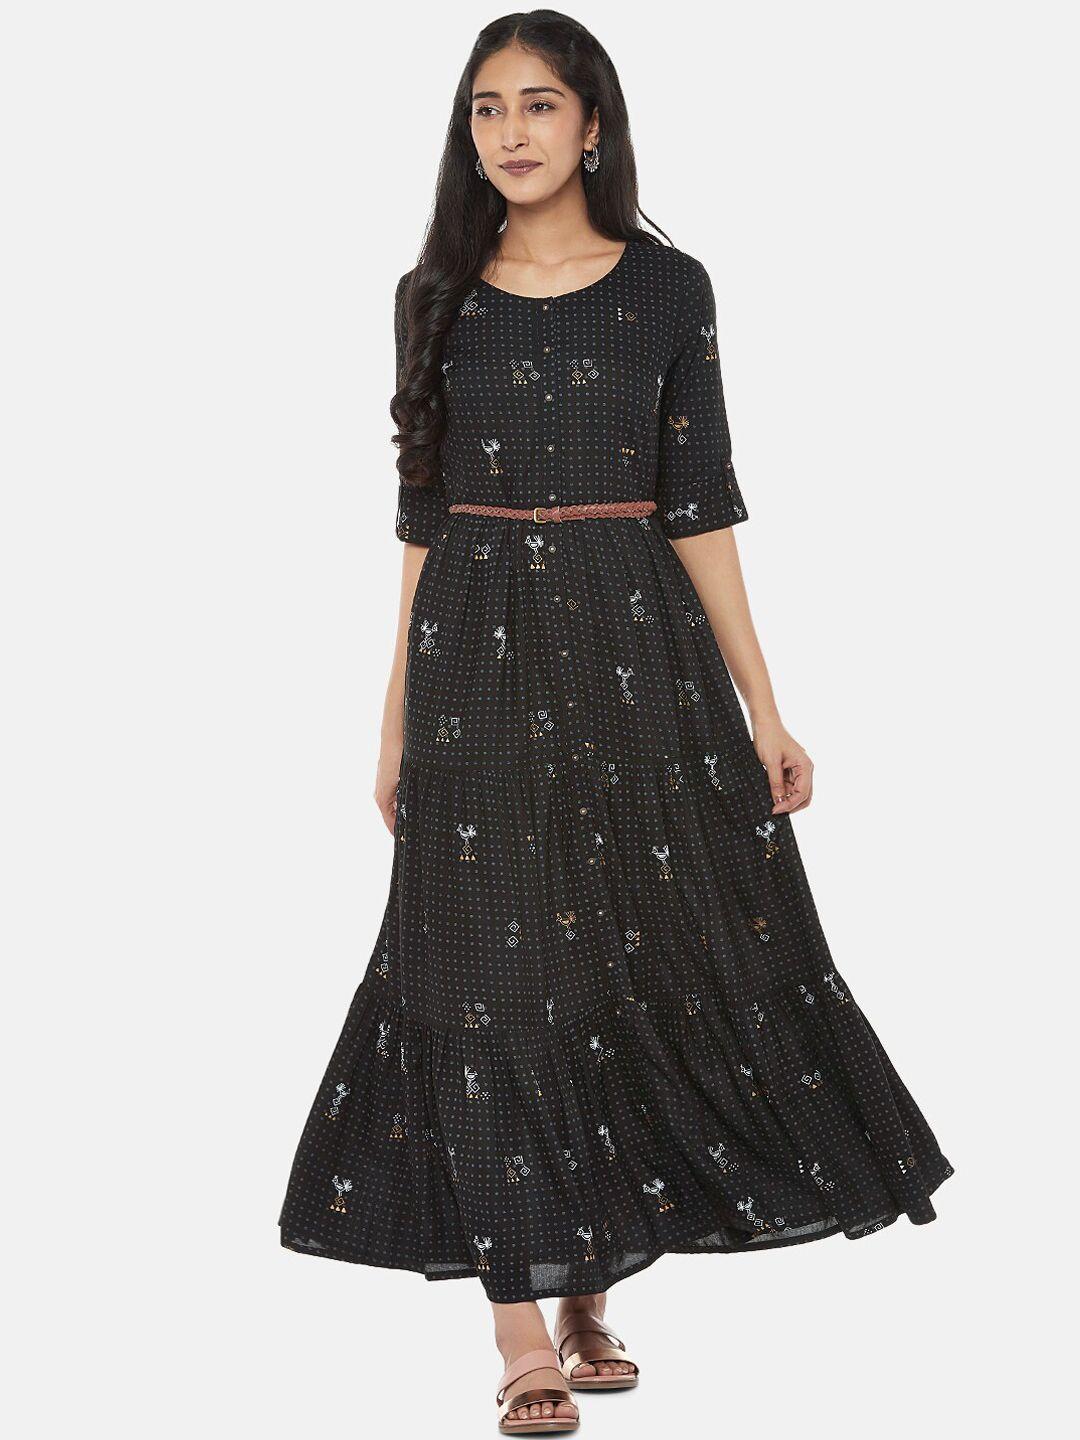 akkriti by pantaloons women black printed maxi dress